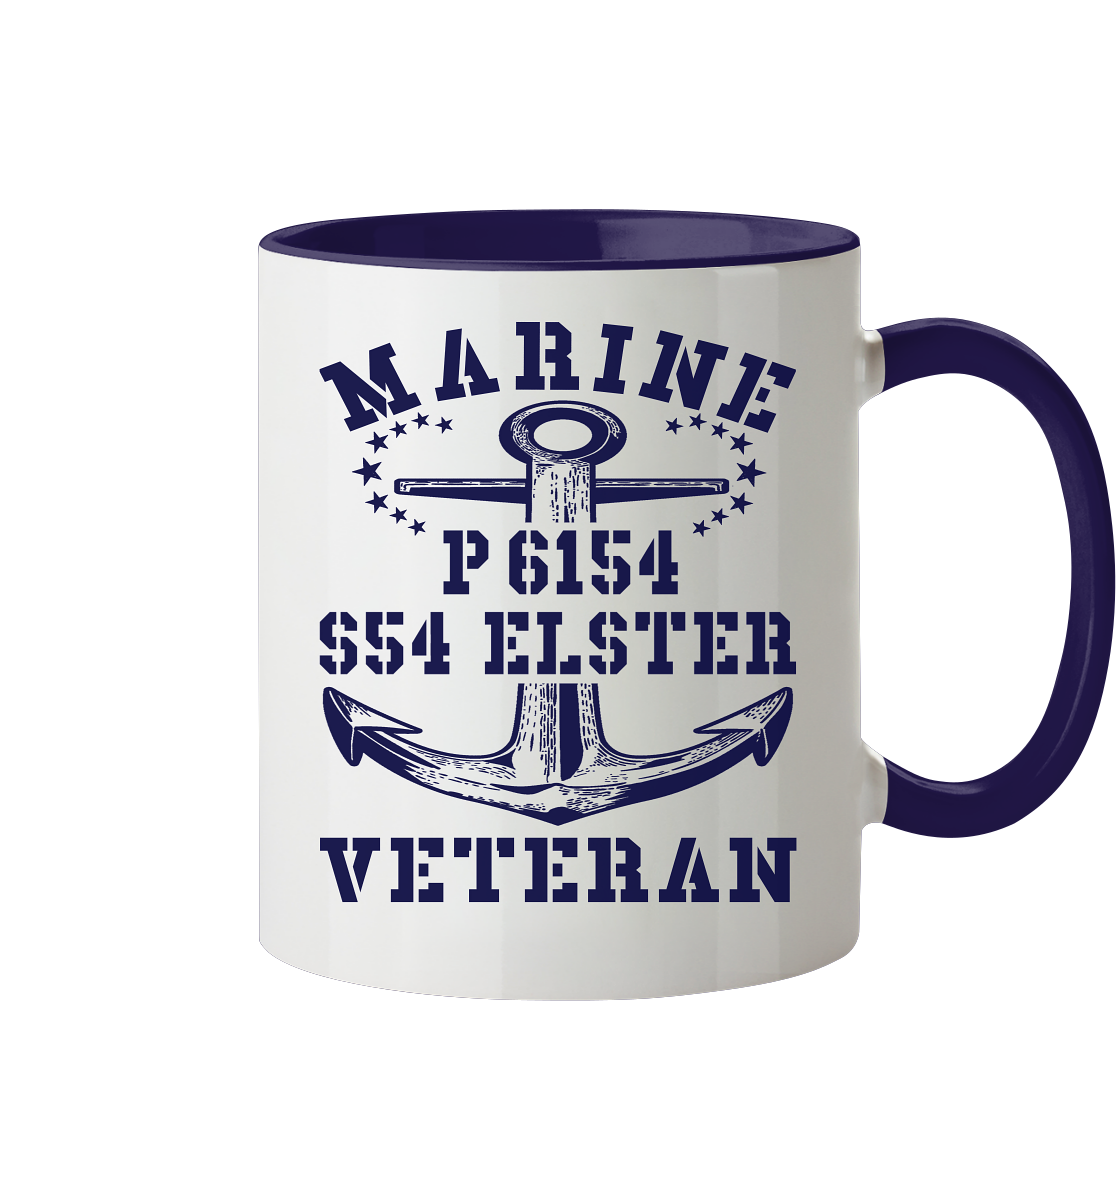 P6154 S54 ELSTER Marine Veteran - Tasse zweifarbig